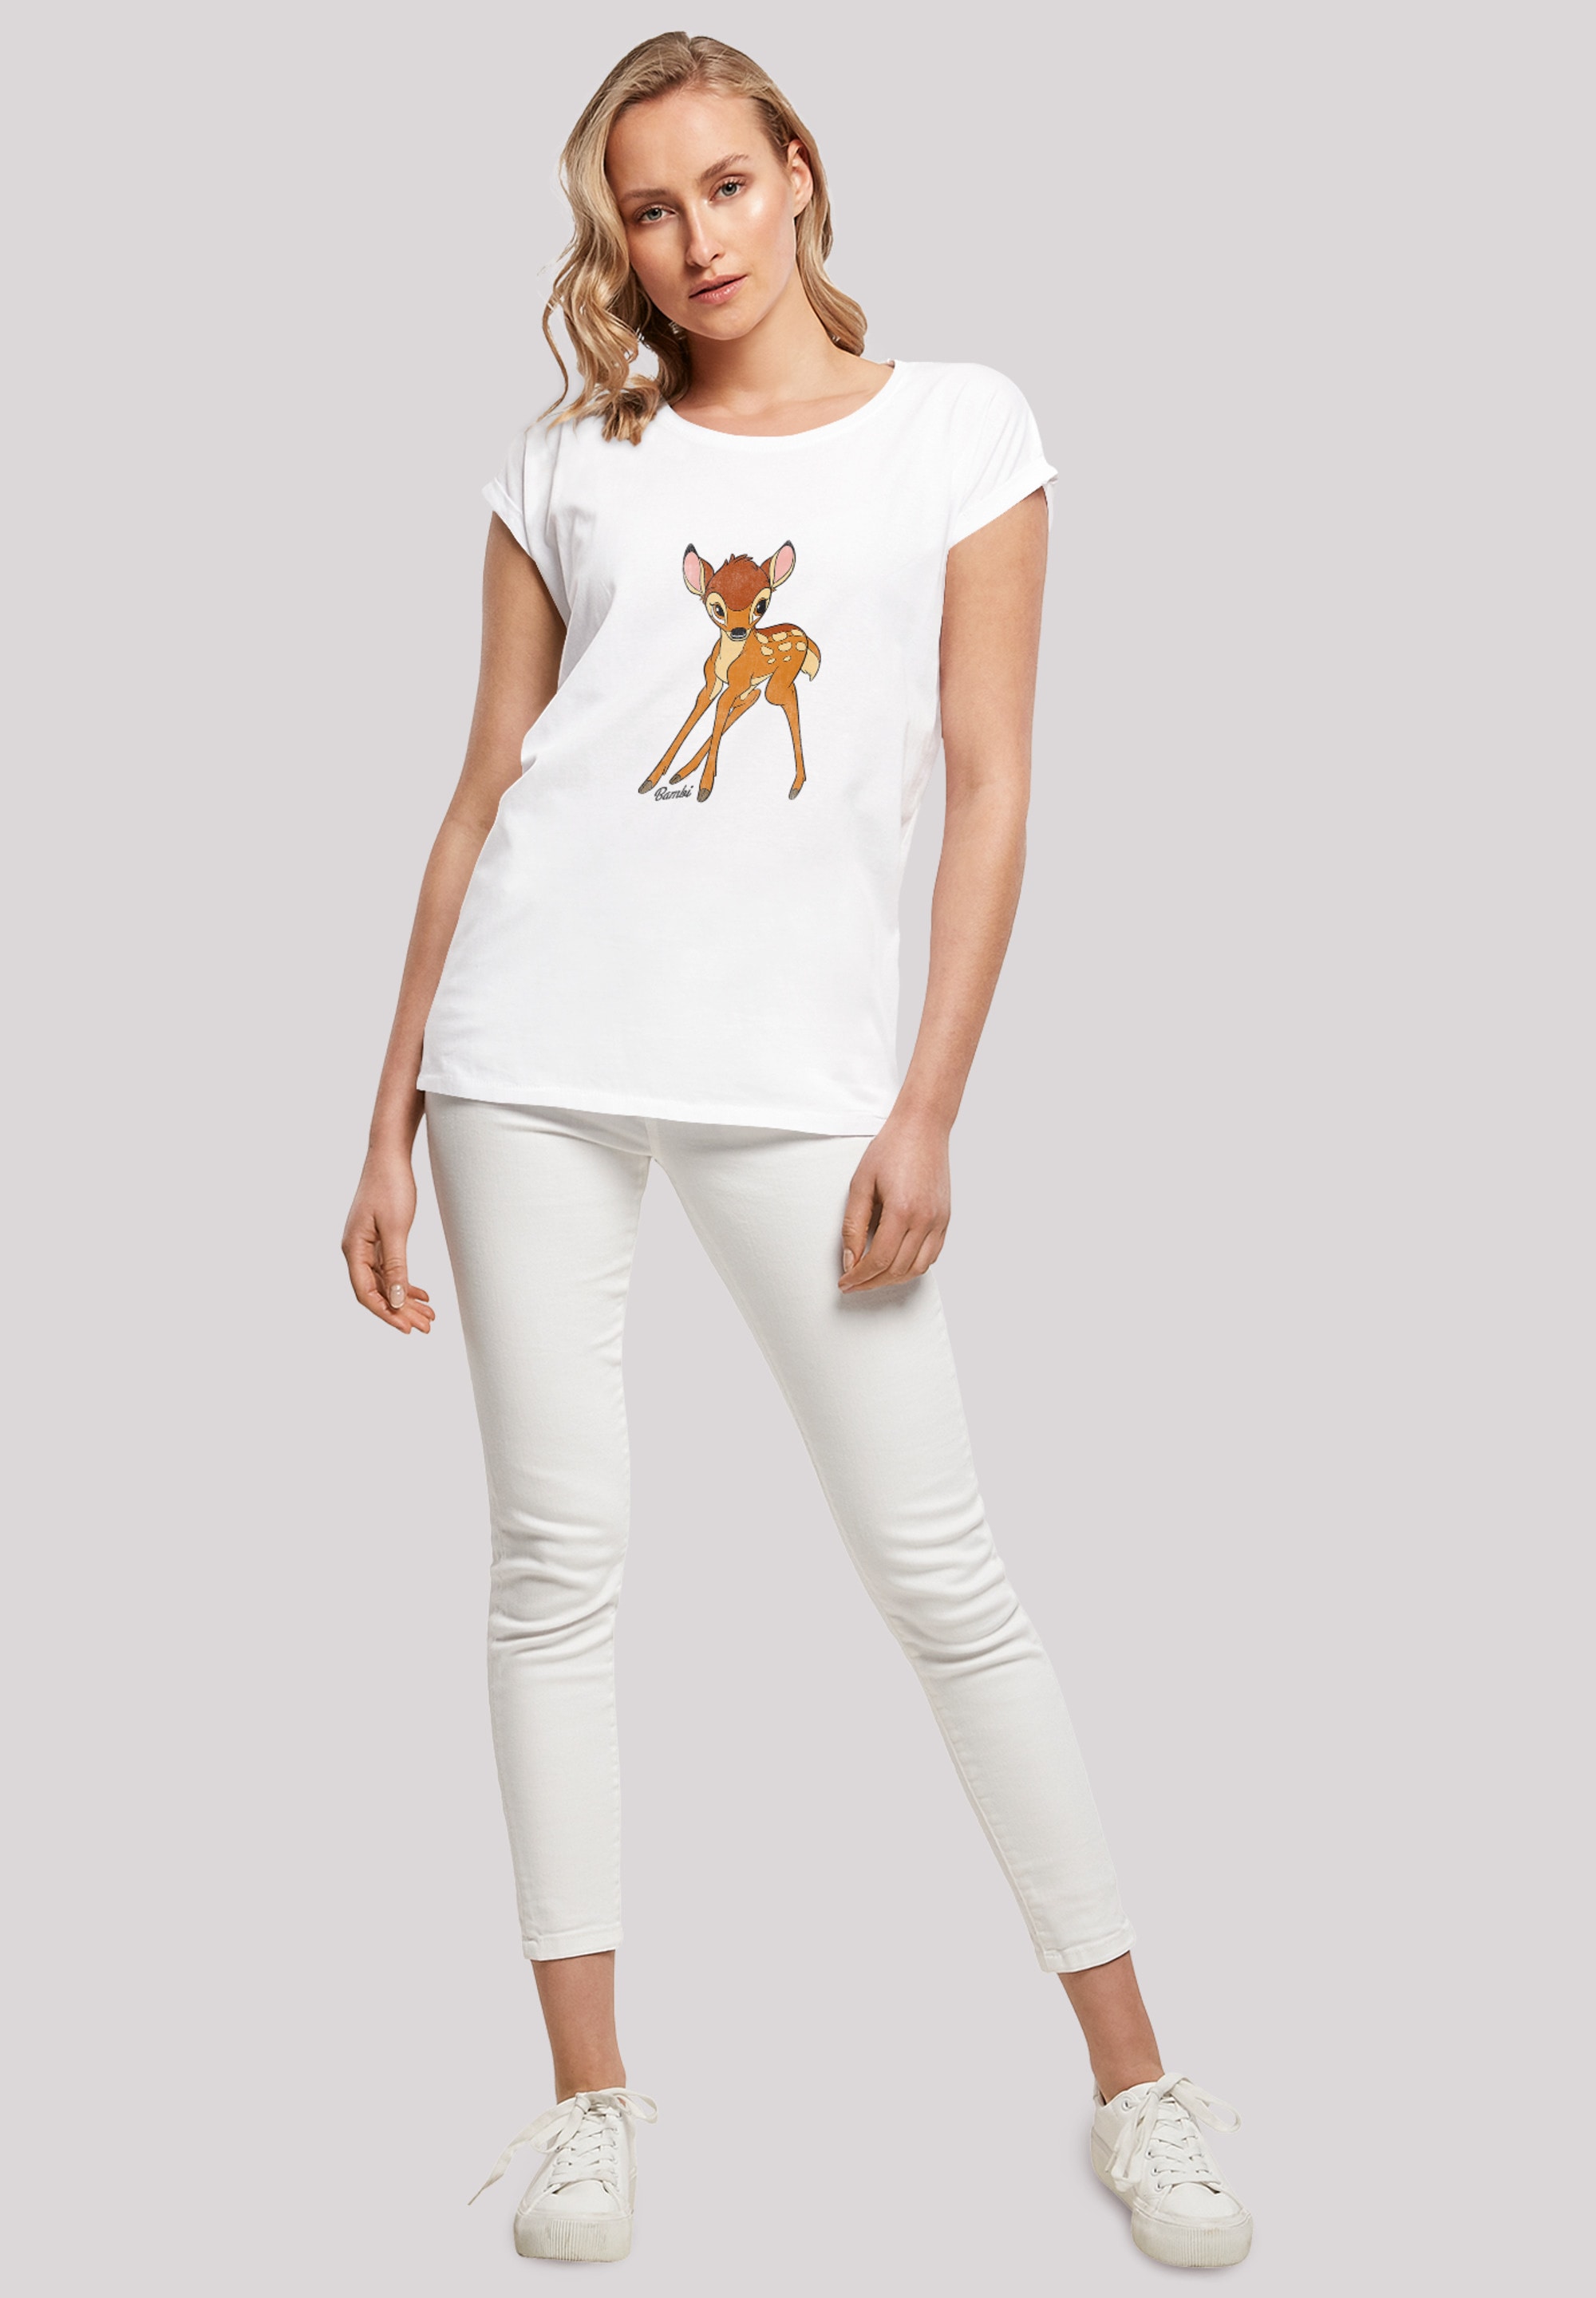 Print kaufen | I\'m Classic«, walking »Bambi F4NT4STIC T-Shirt